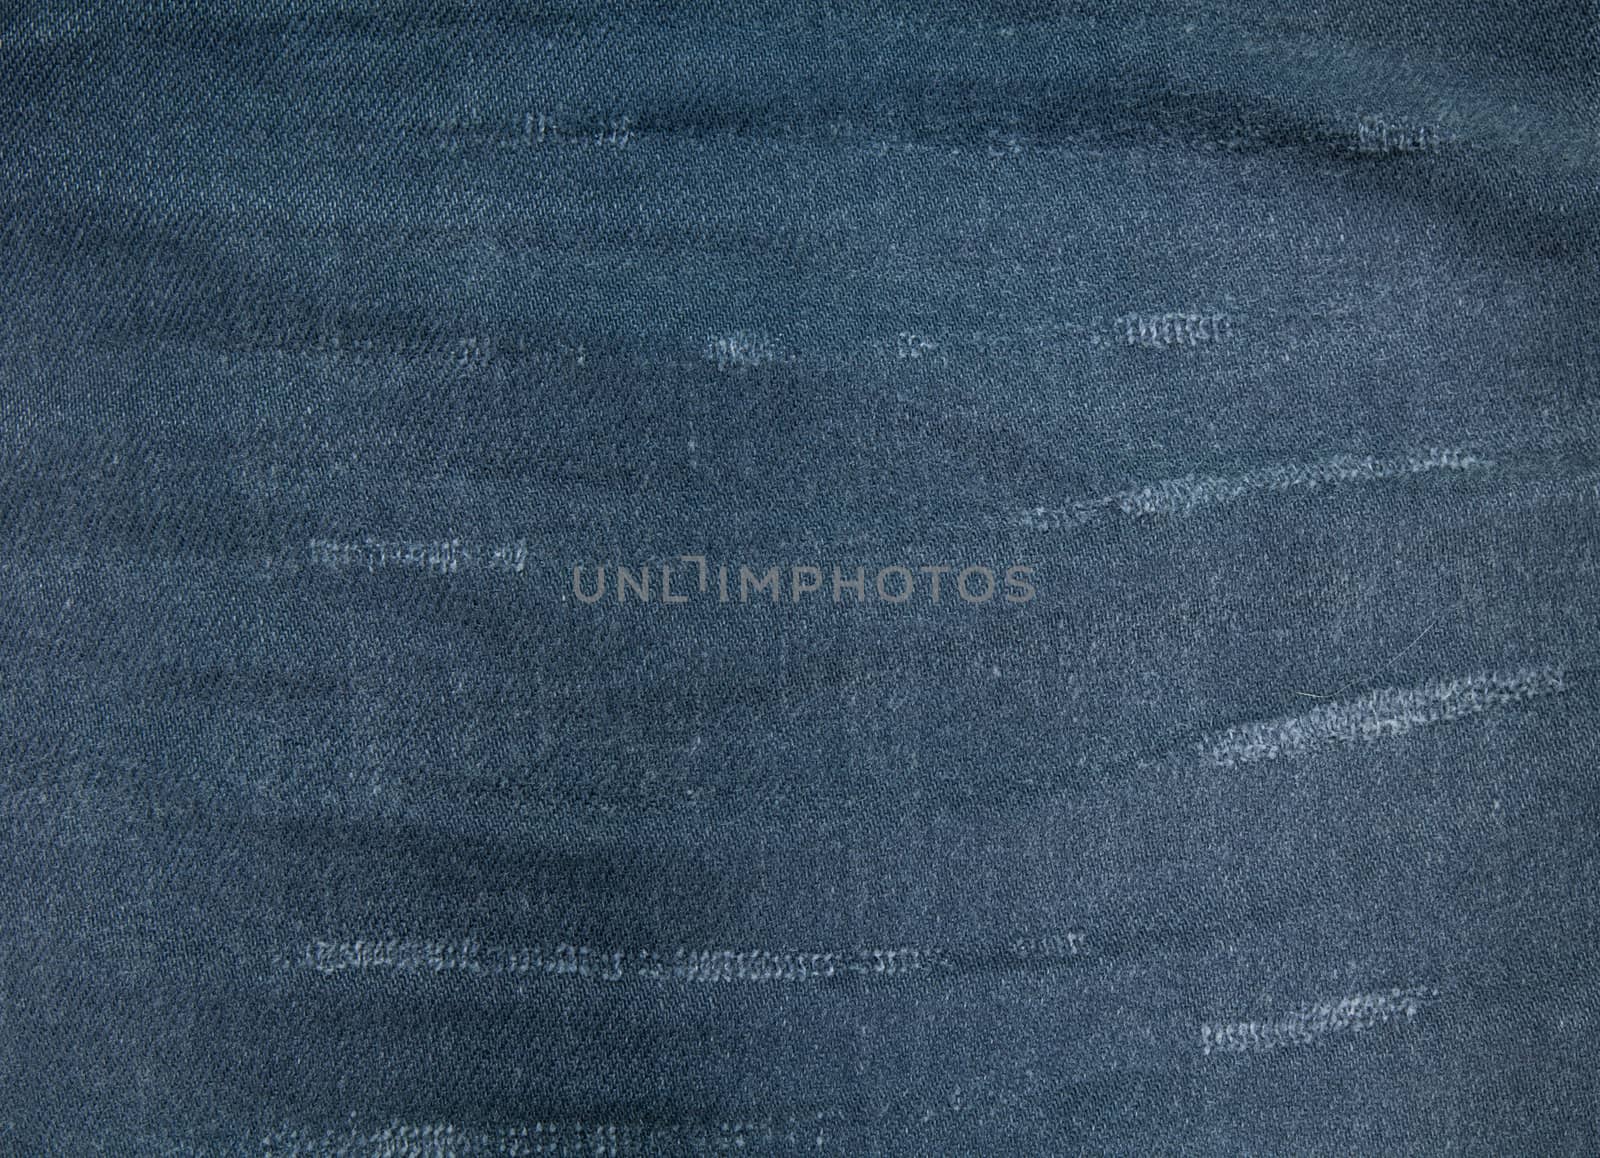 Jeans texture background  by Sorapop